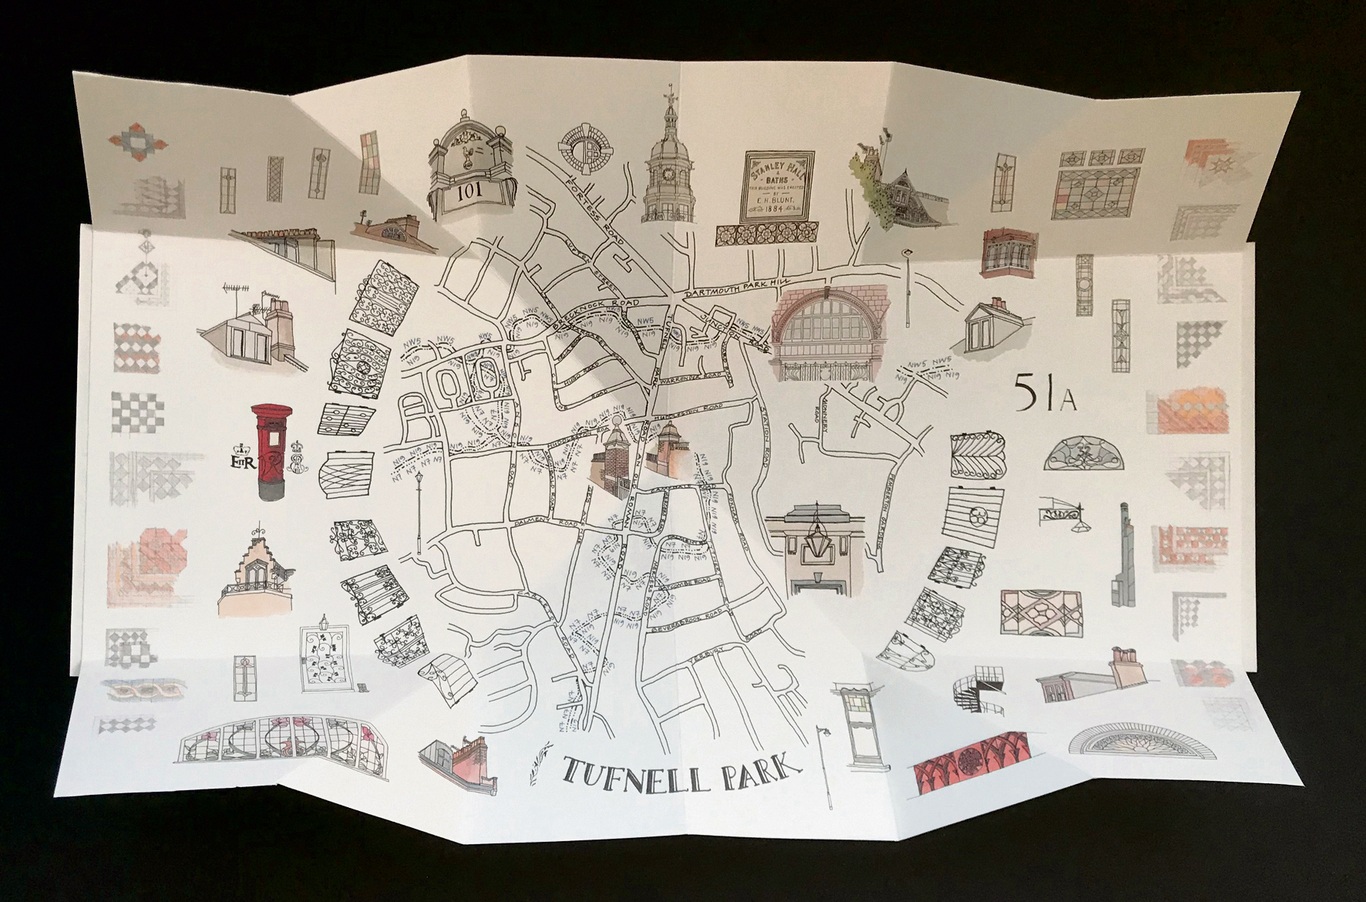 Christine Nicholls intricate map of Tufnell Park